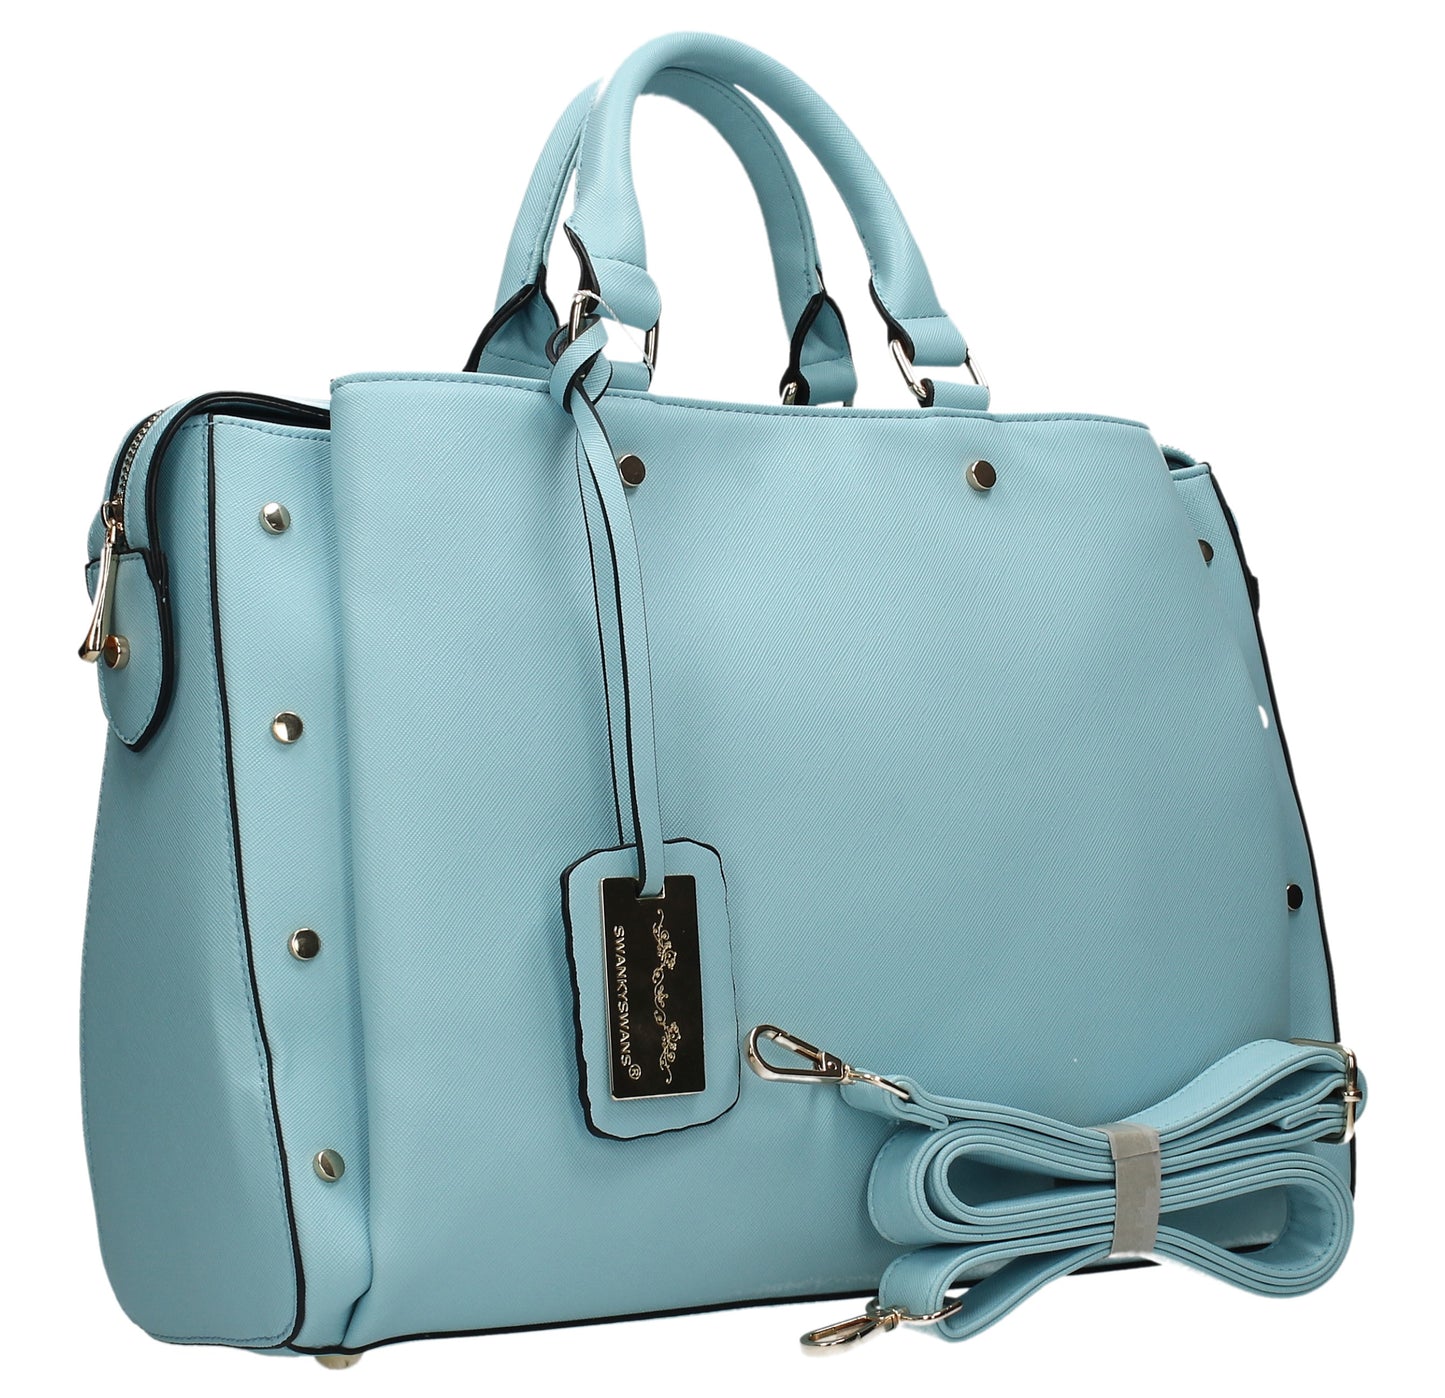 SWANKYSWANS Michelle PU Handbag Light Blue